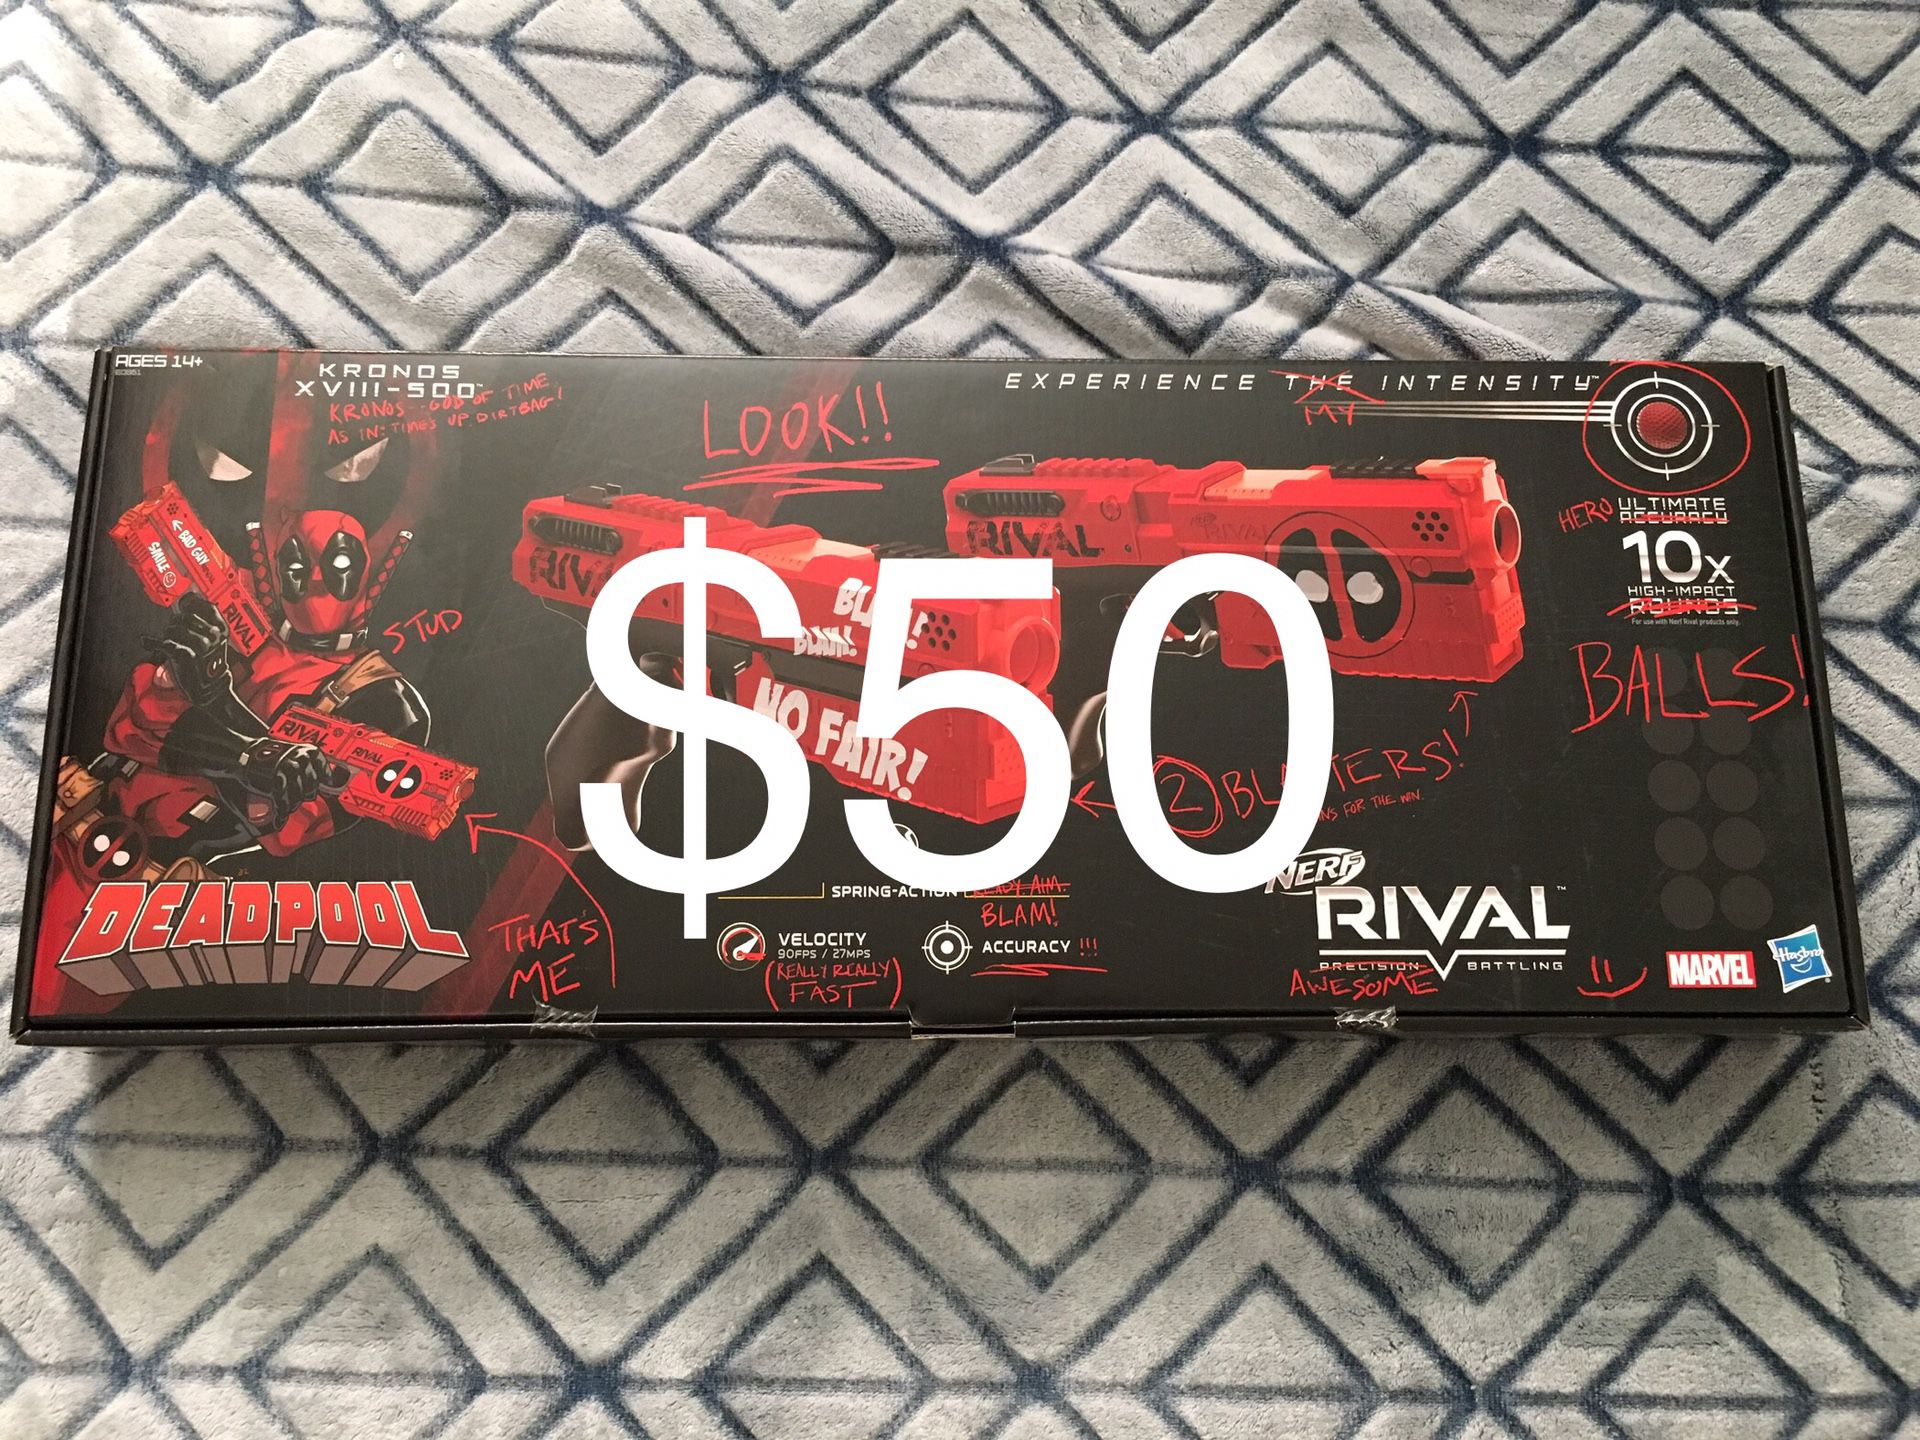 Deadpool Nerf Rival Kronos xviii-500 guns new